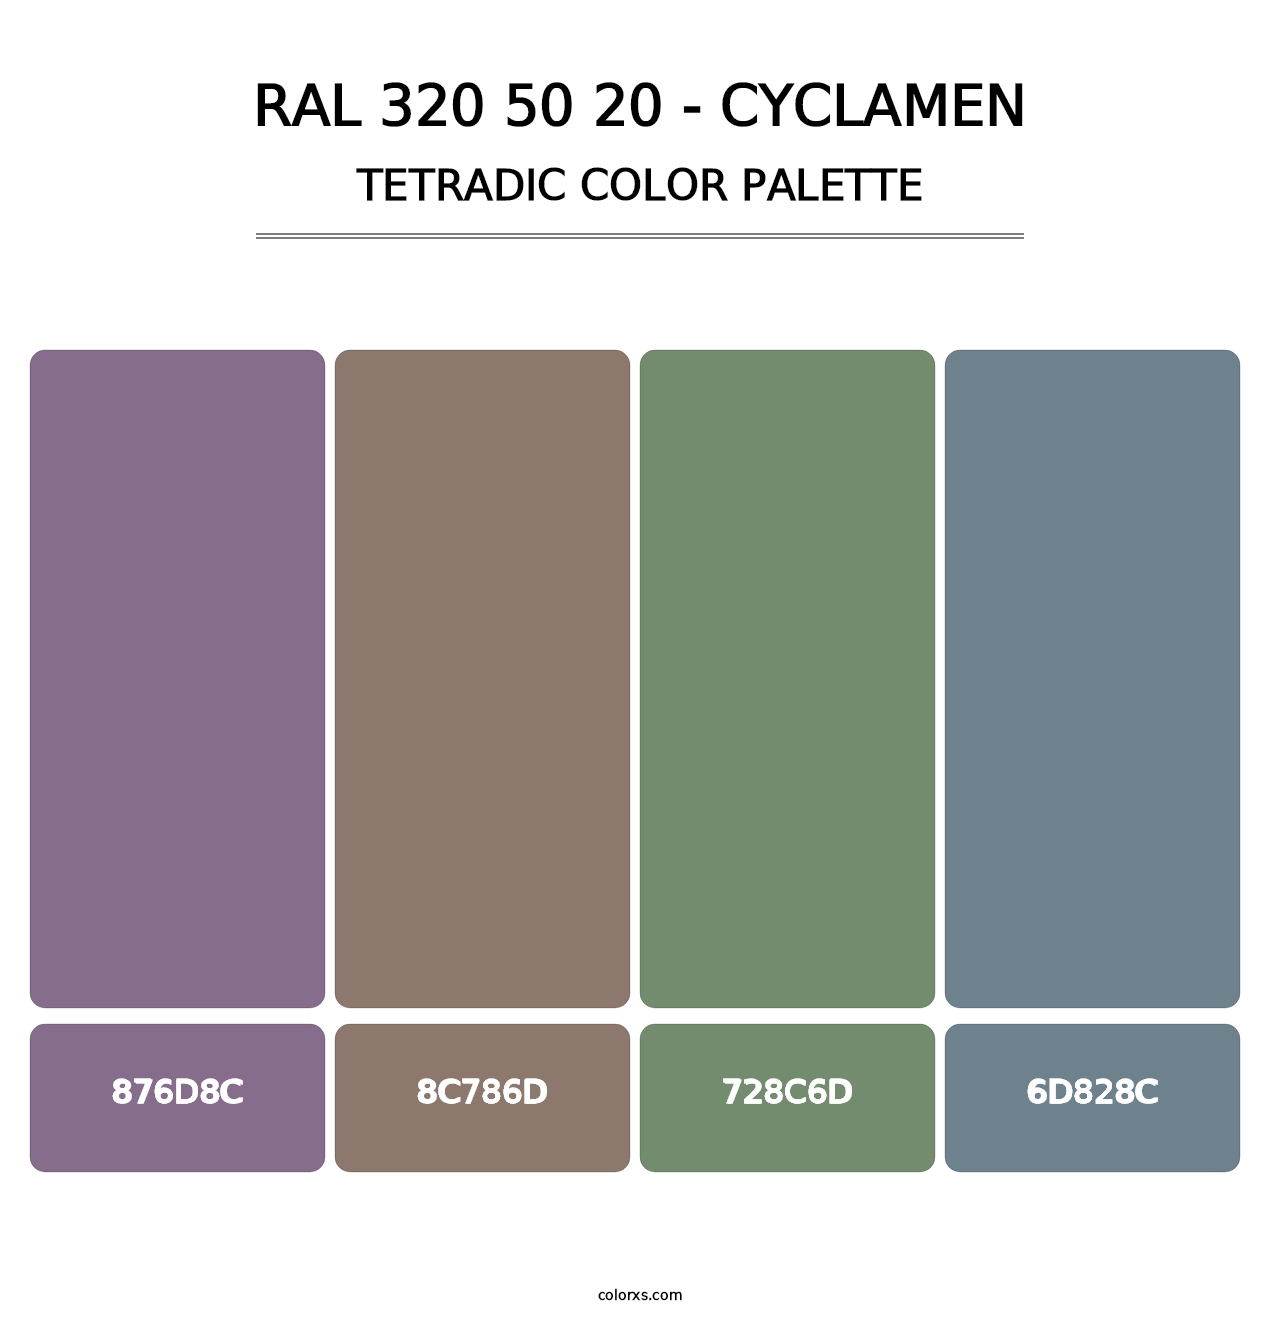 RAL 320 50 20 - Cyclamen - Tetradic Color Palette